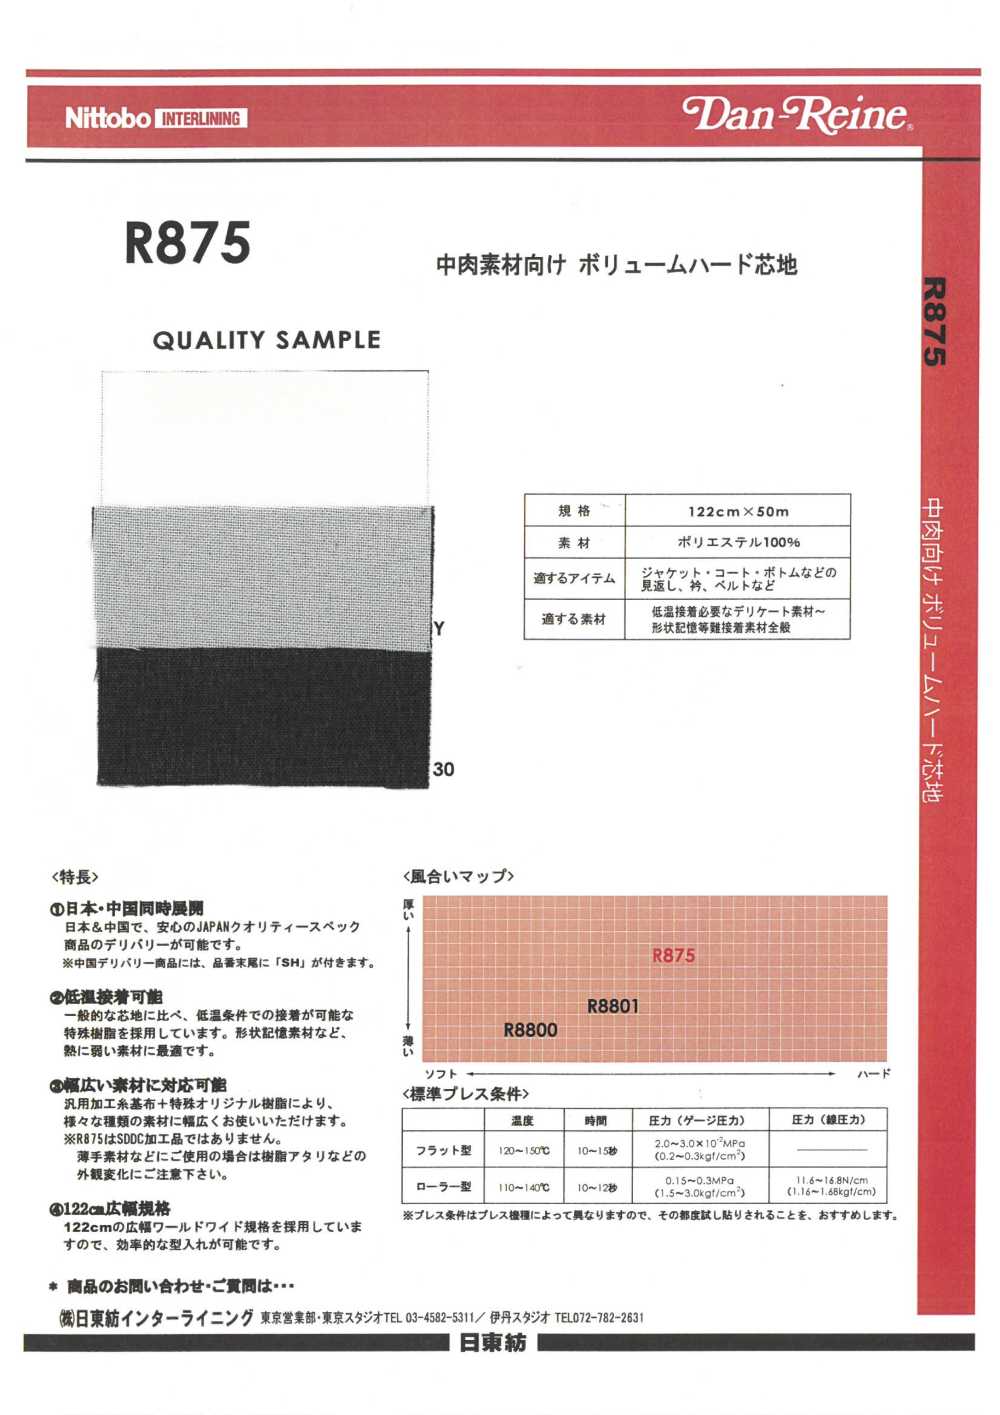 R875 适用于中等厚度材料的体积硬质衬布 日东纺绩